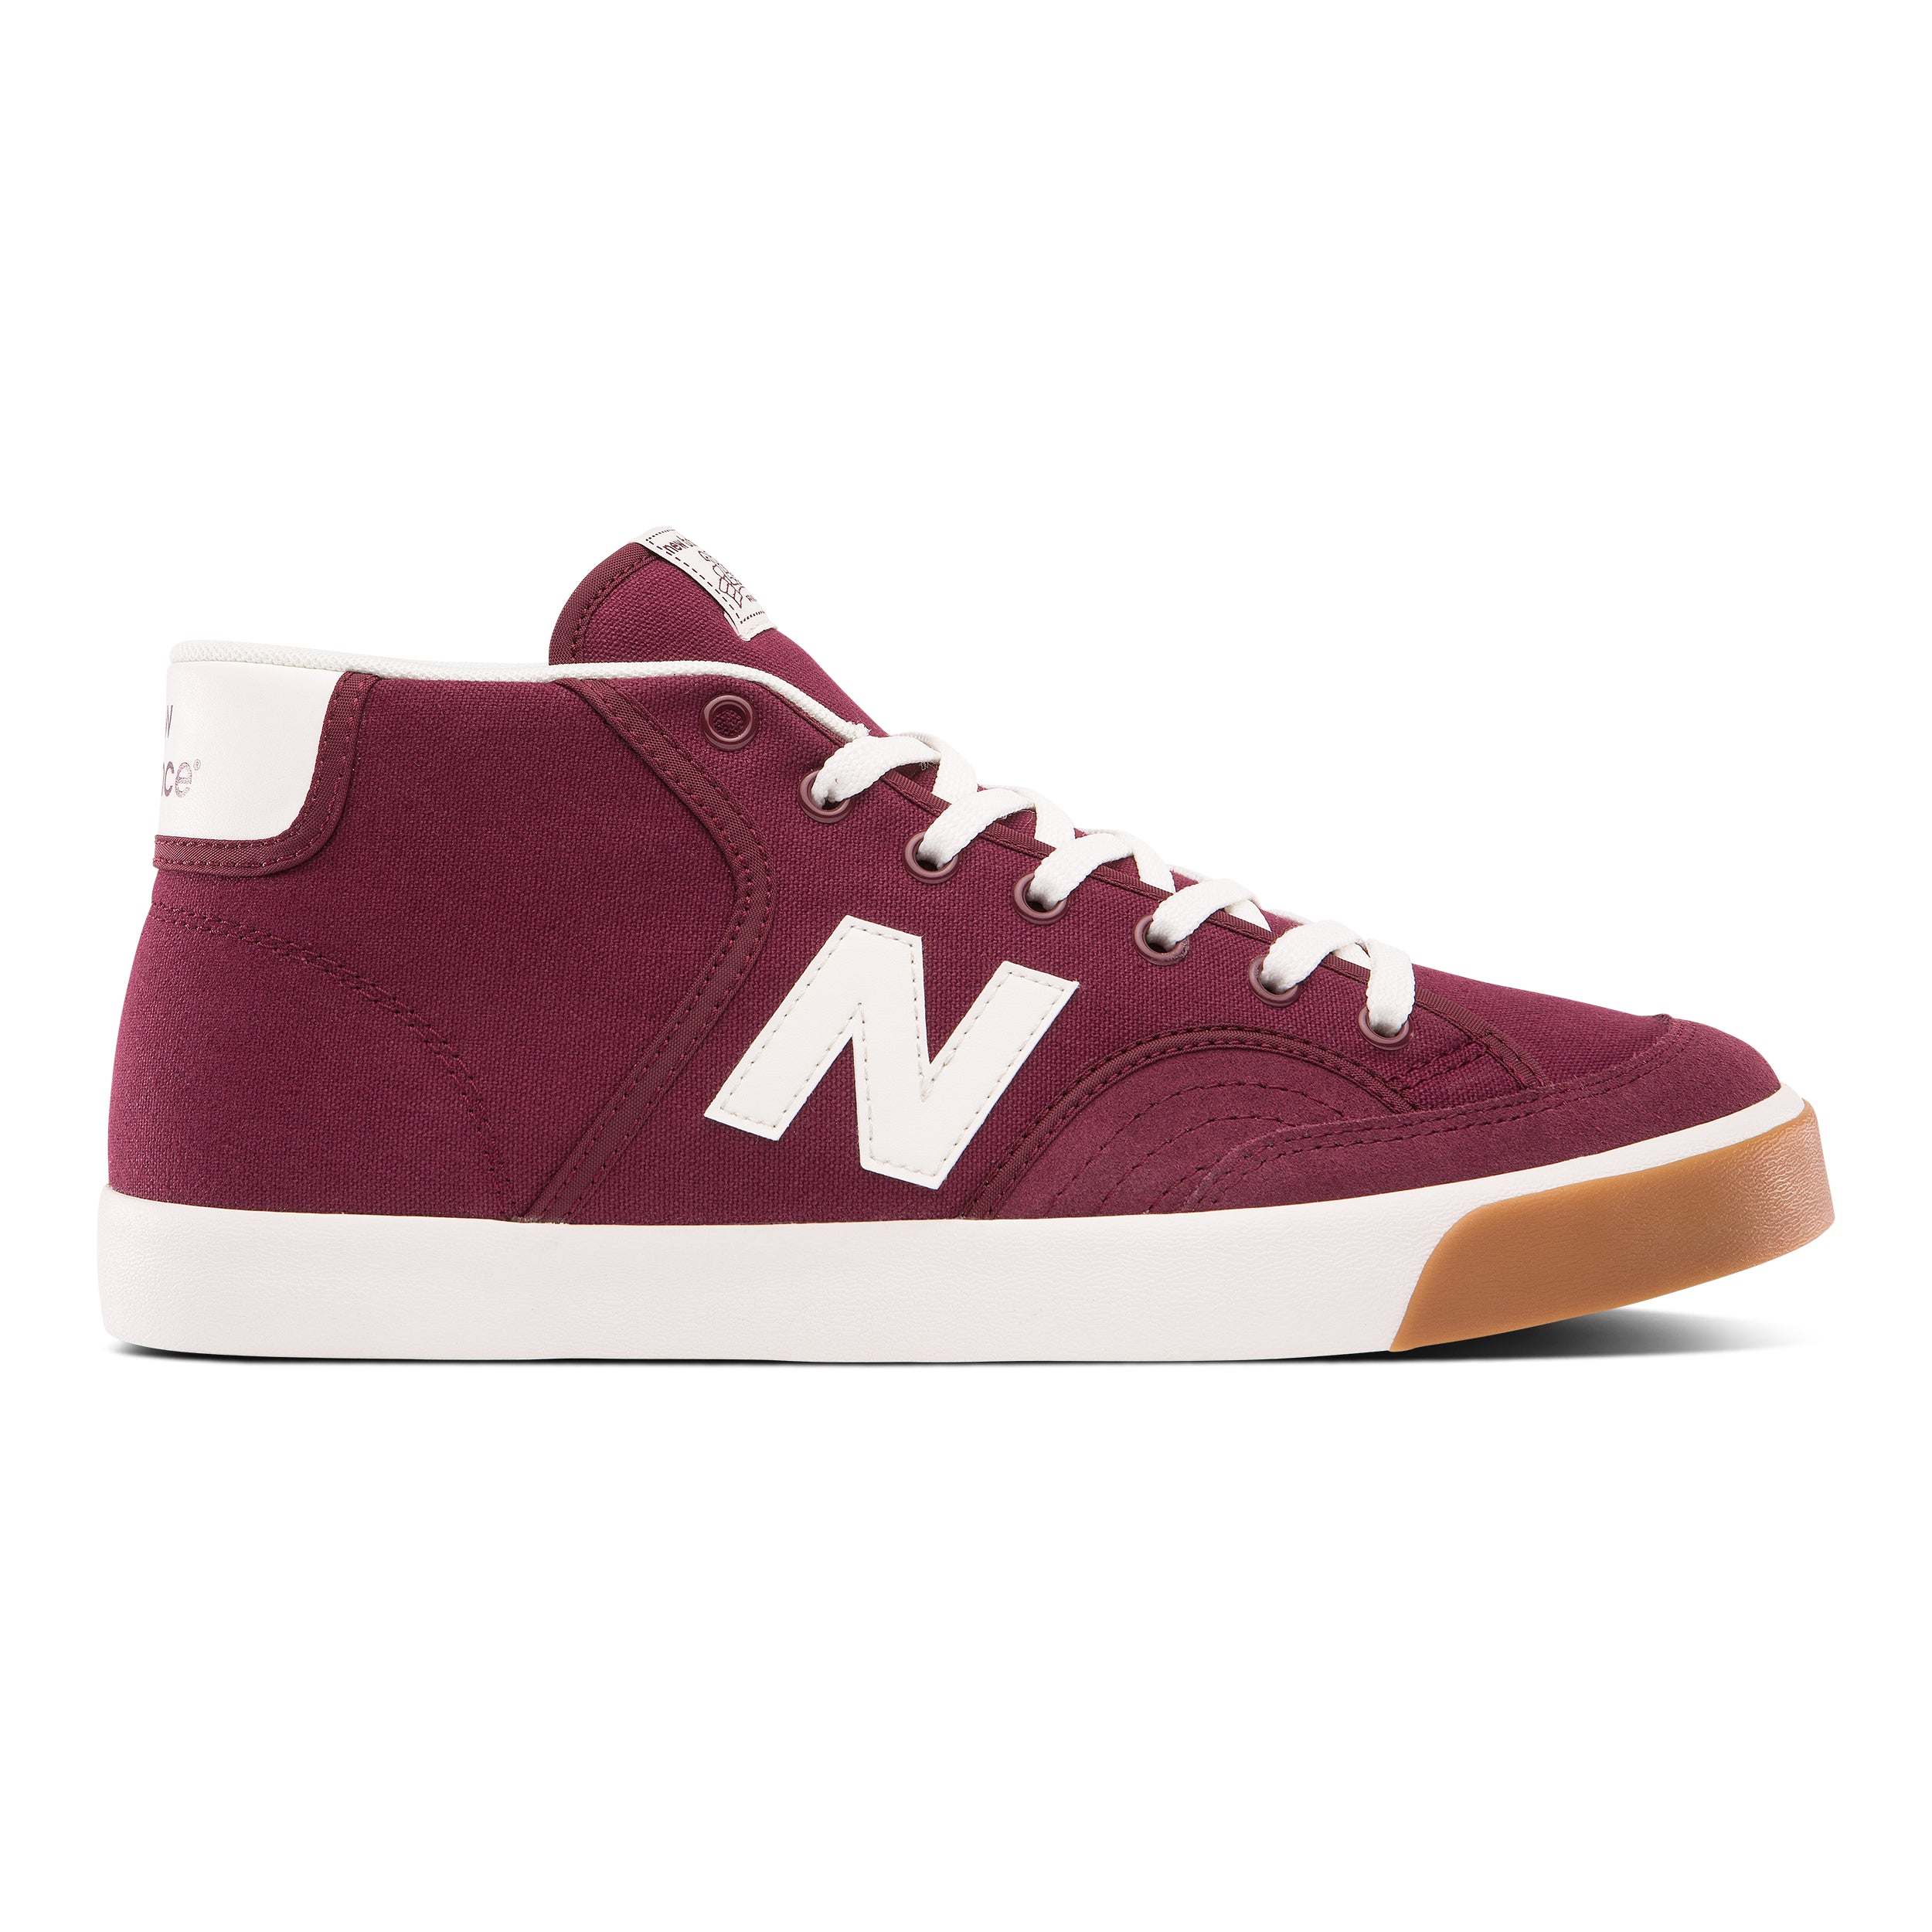 Burgundy NM213 Pro Court NB Numeric Mid Top Skateboard Shoe